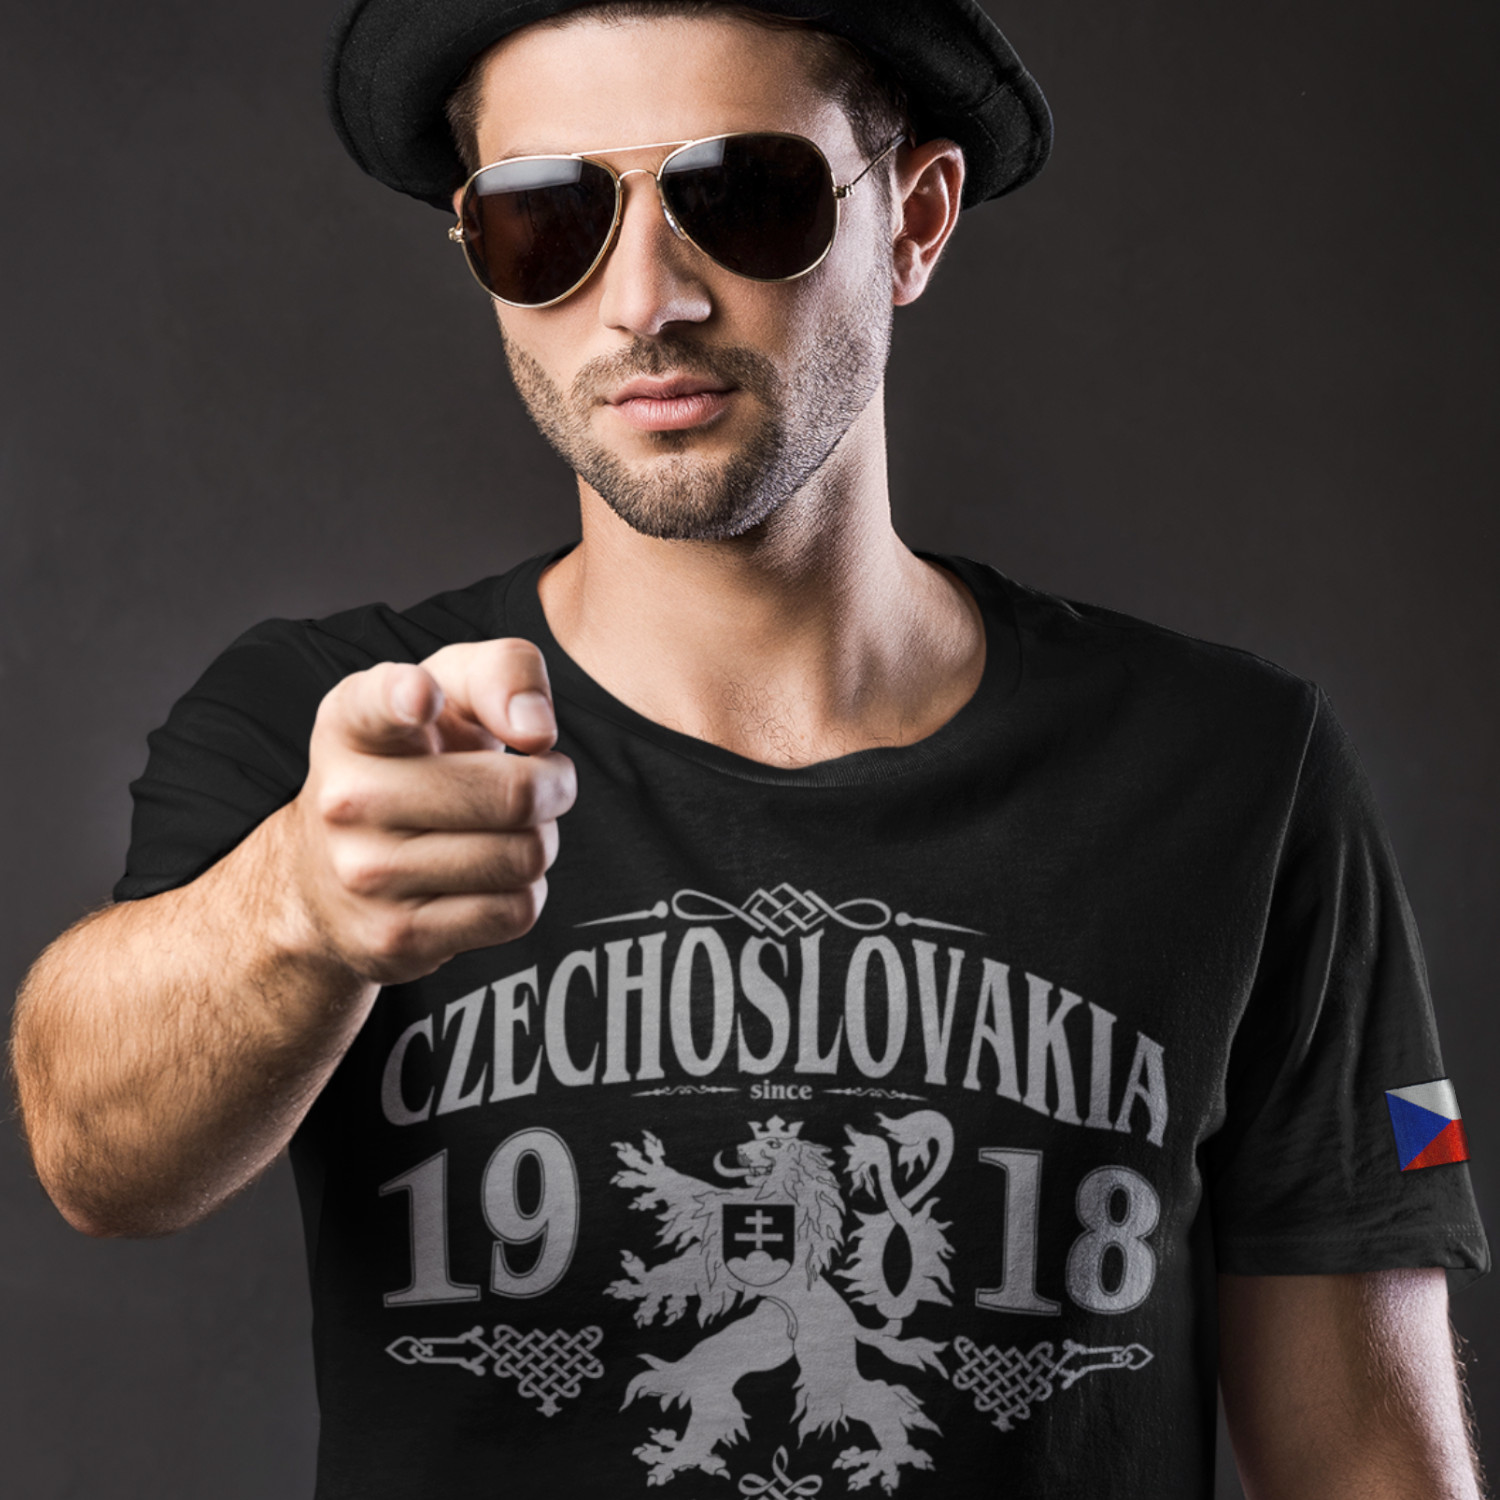 CZECHOSLOVAKIA 1918 - pánske tričko